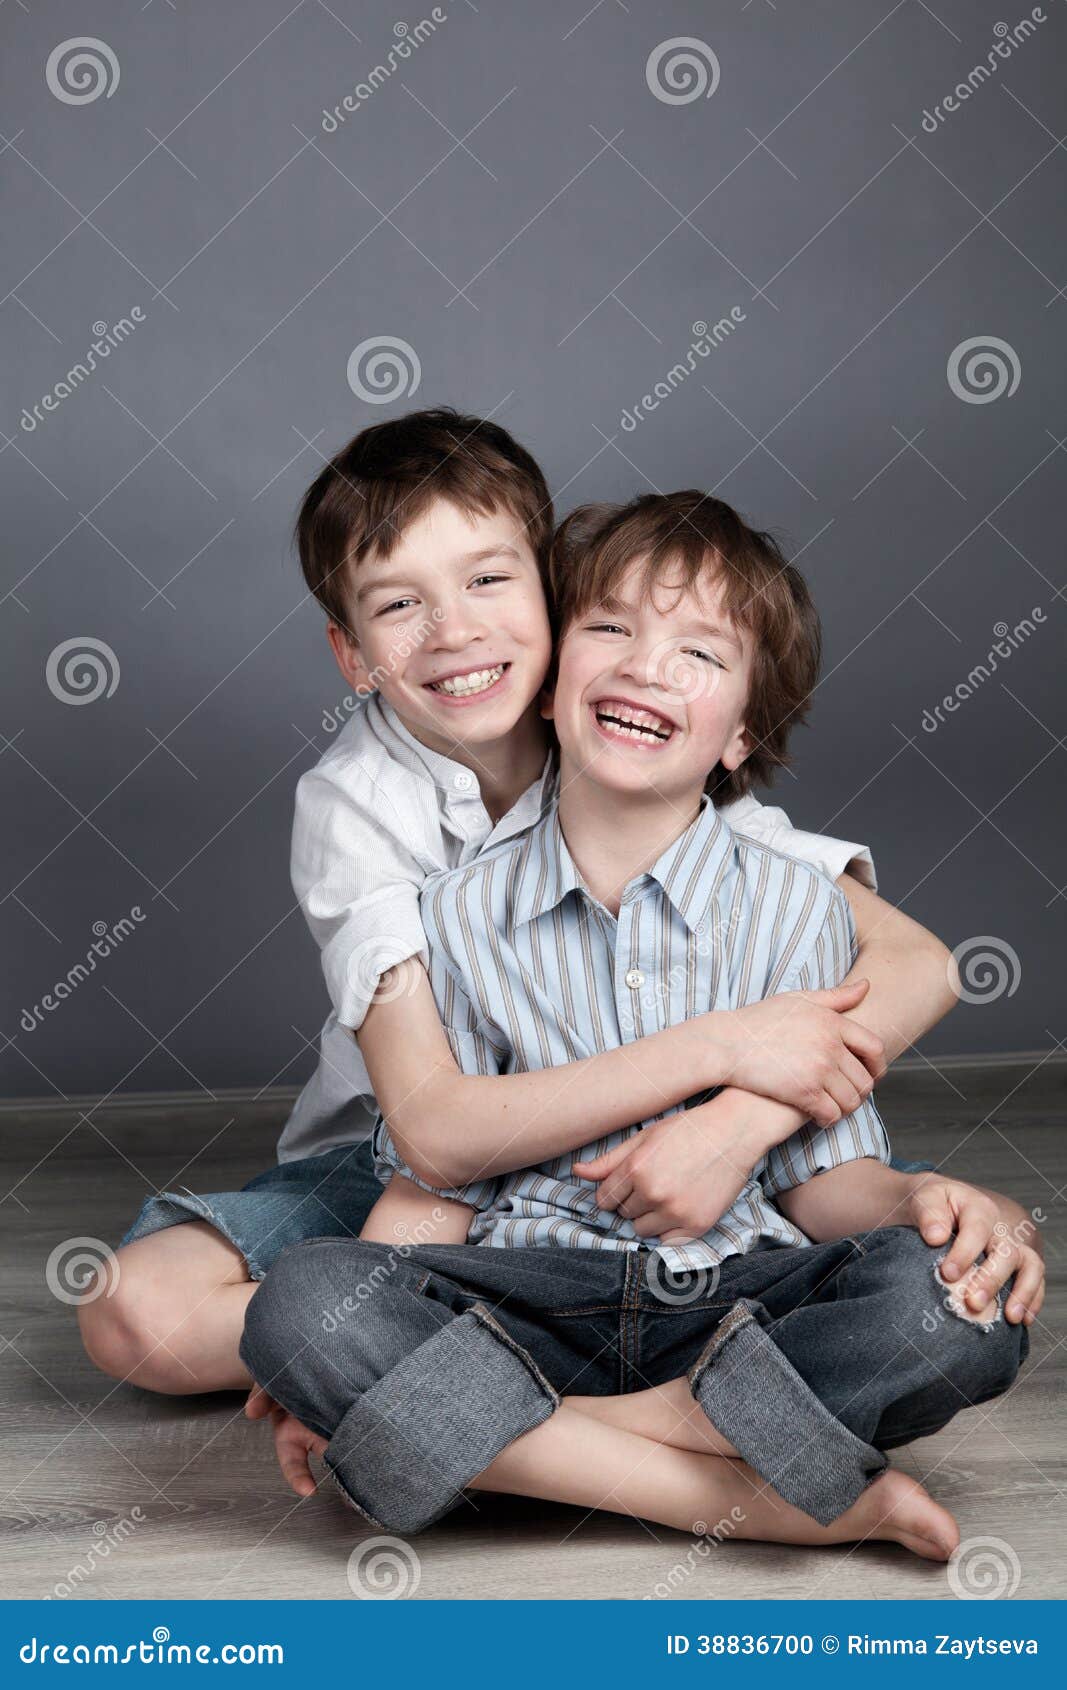 Два счастливых брата. Счастливые 2 брата. Радостные братья. Фотопортрет 2 братишки. Счастливые братья фото.